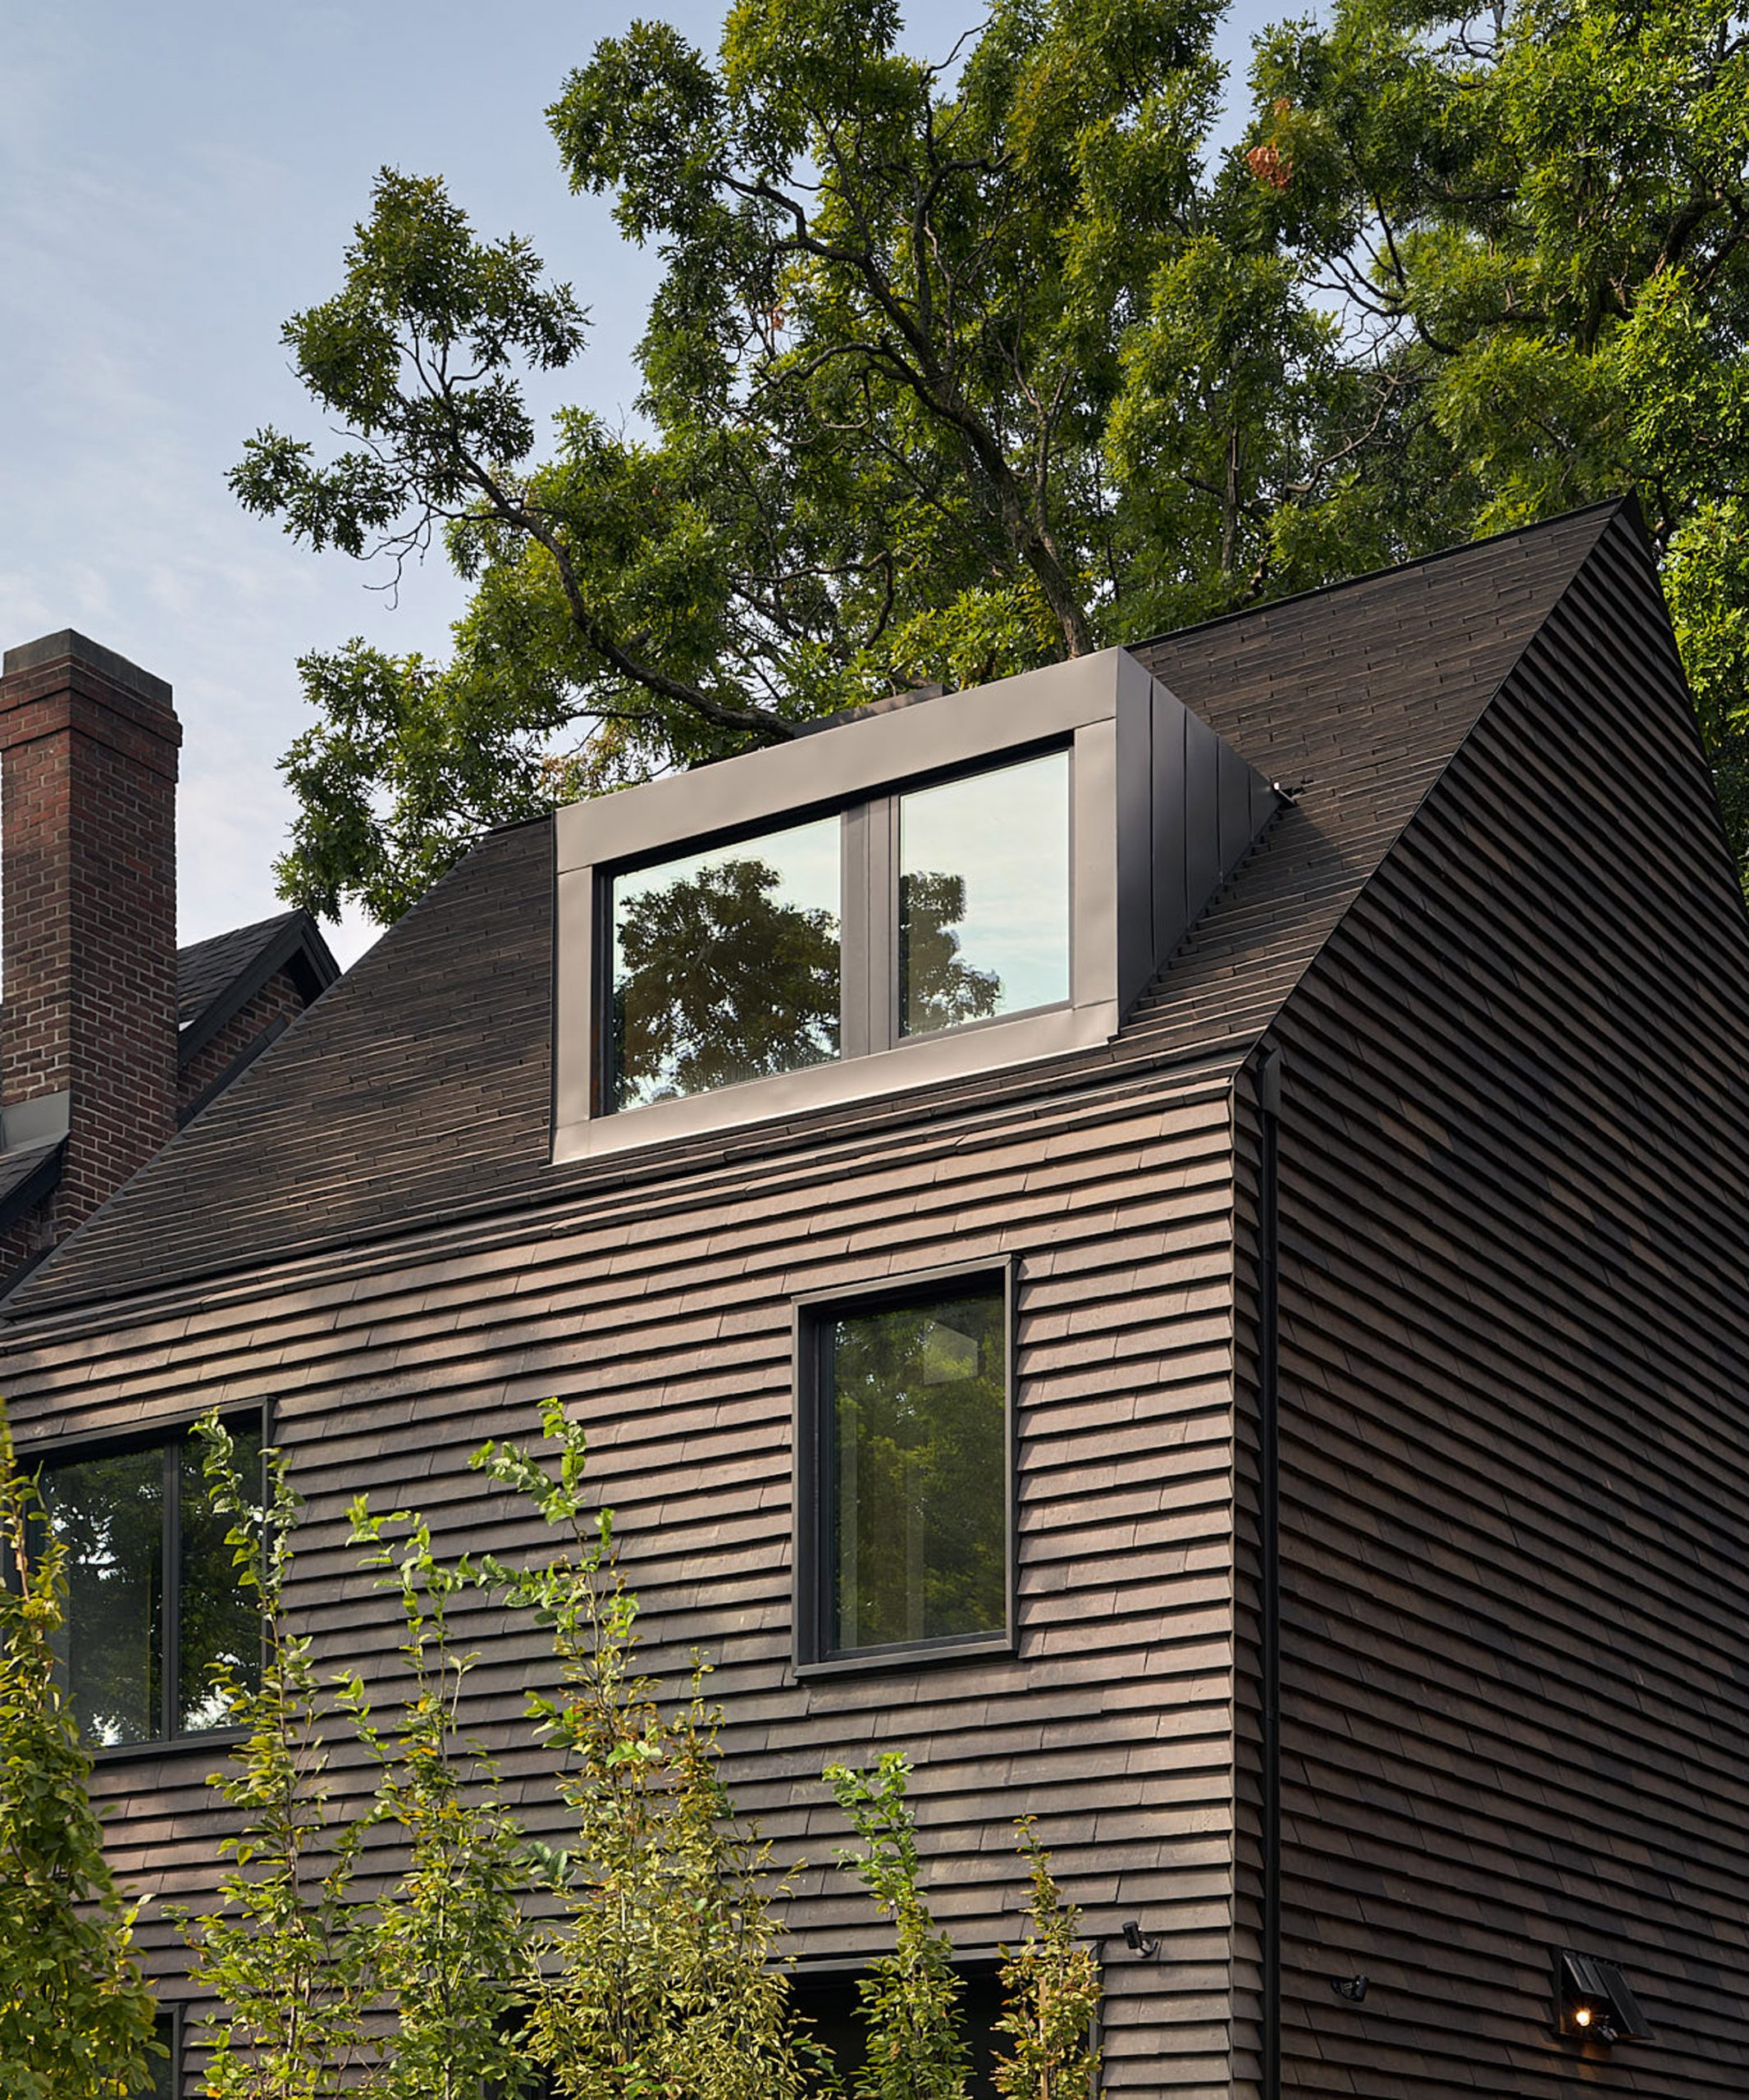 Drew Mandel Architects designed the house in Toronto